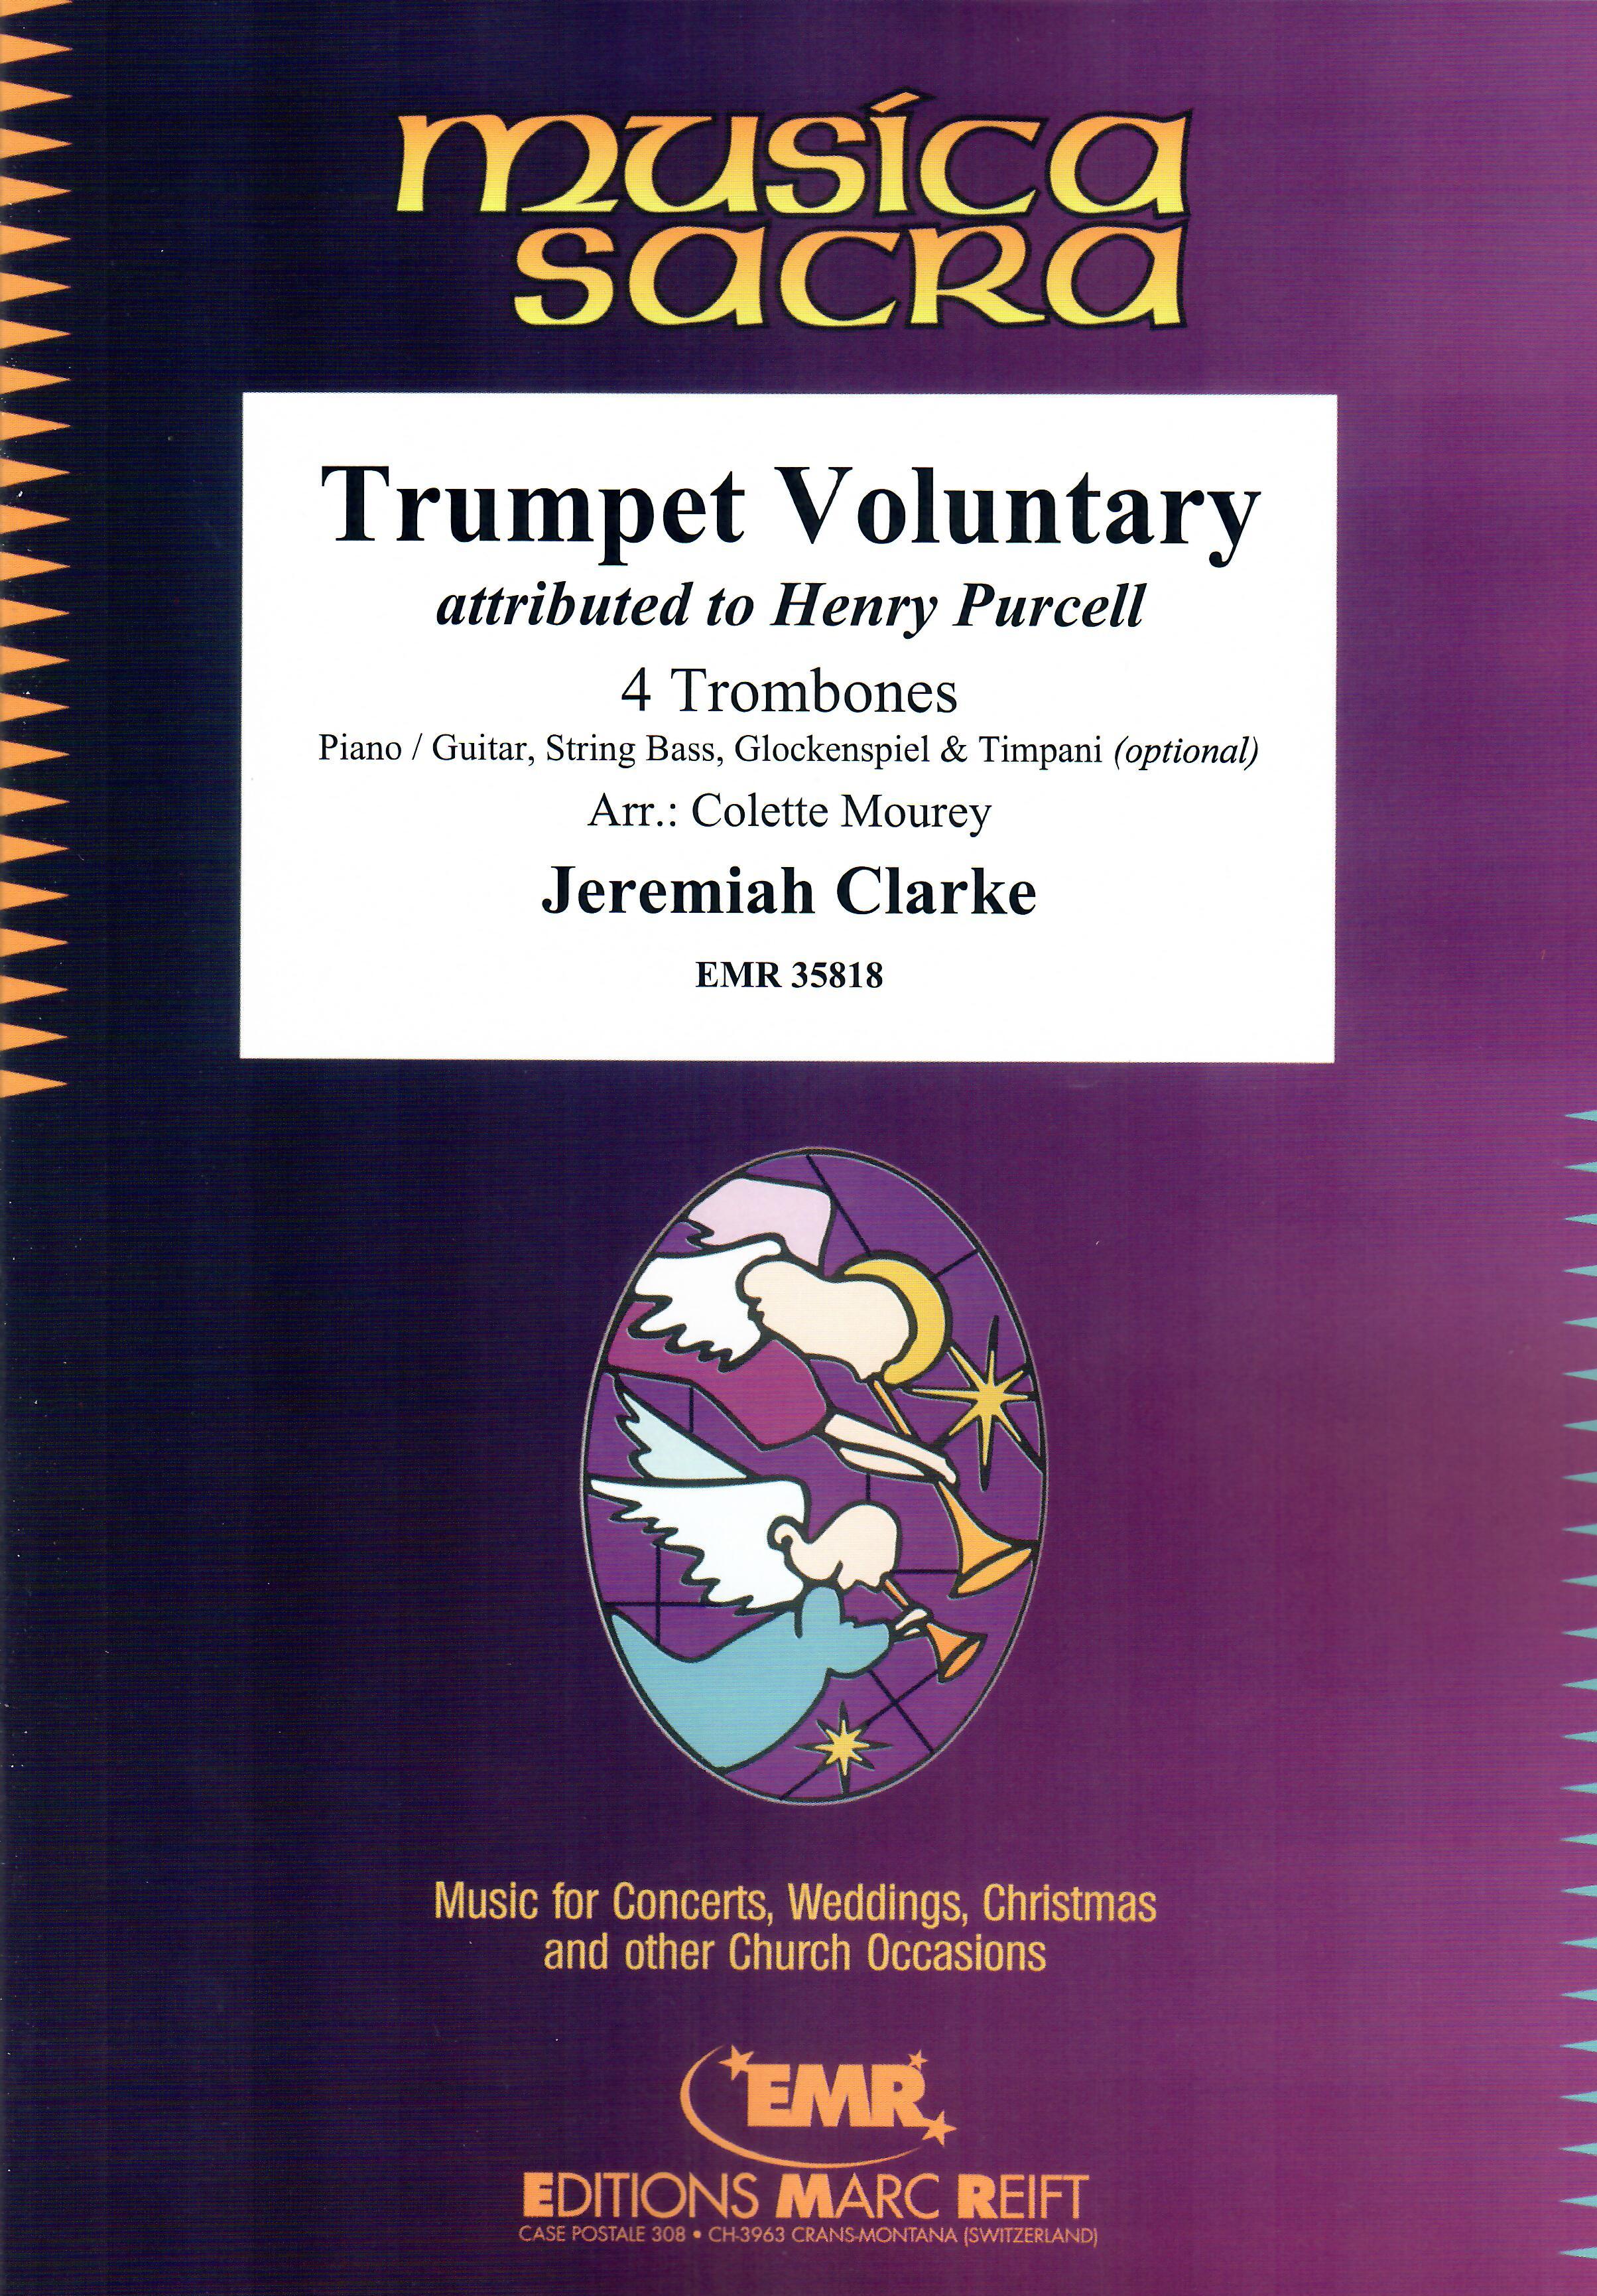 TRUMPET VOLUNTARY, SOLOS - Trombone